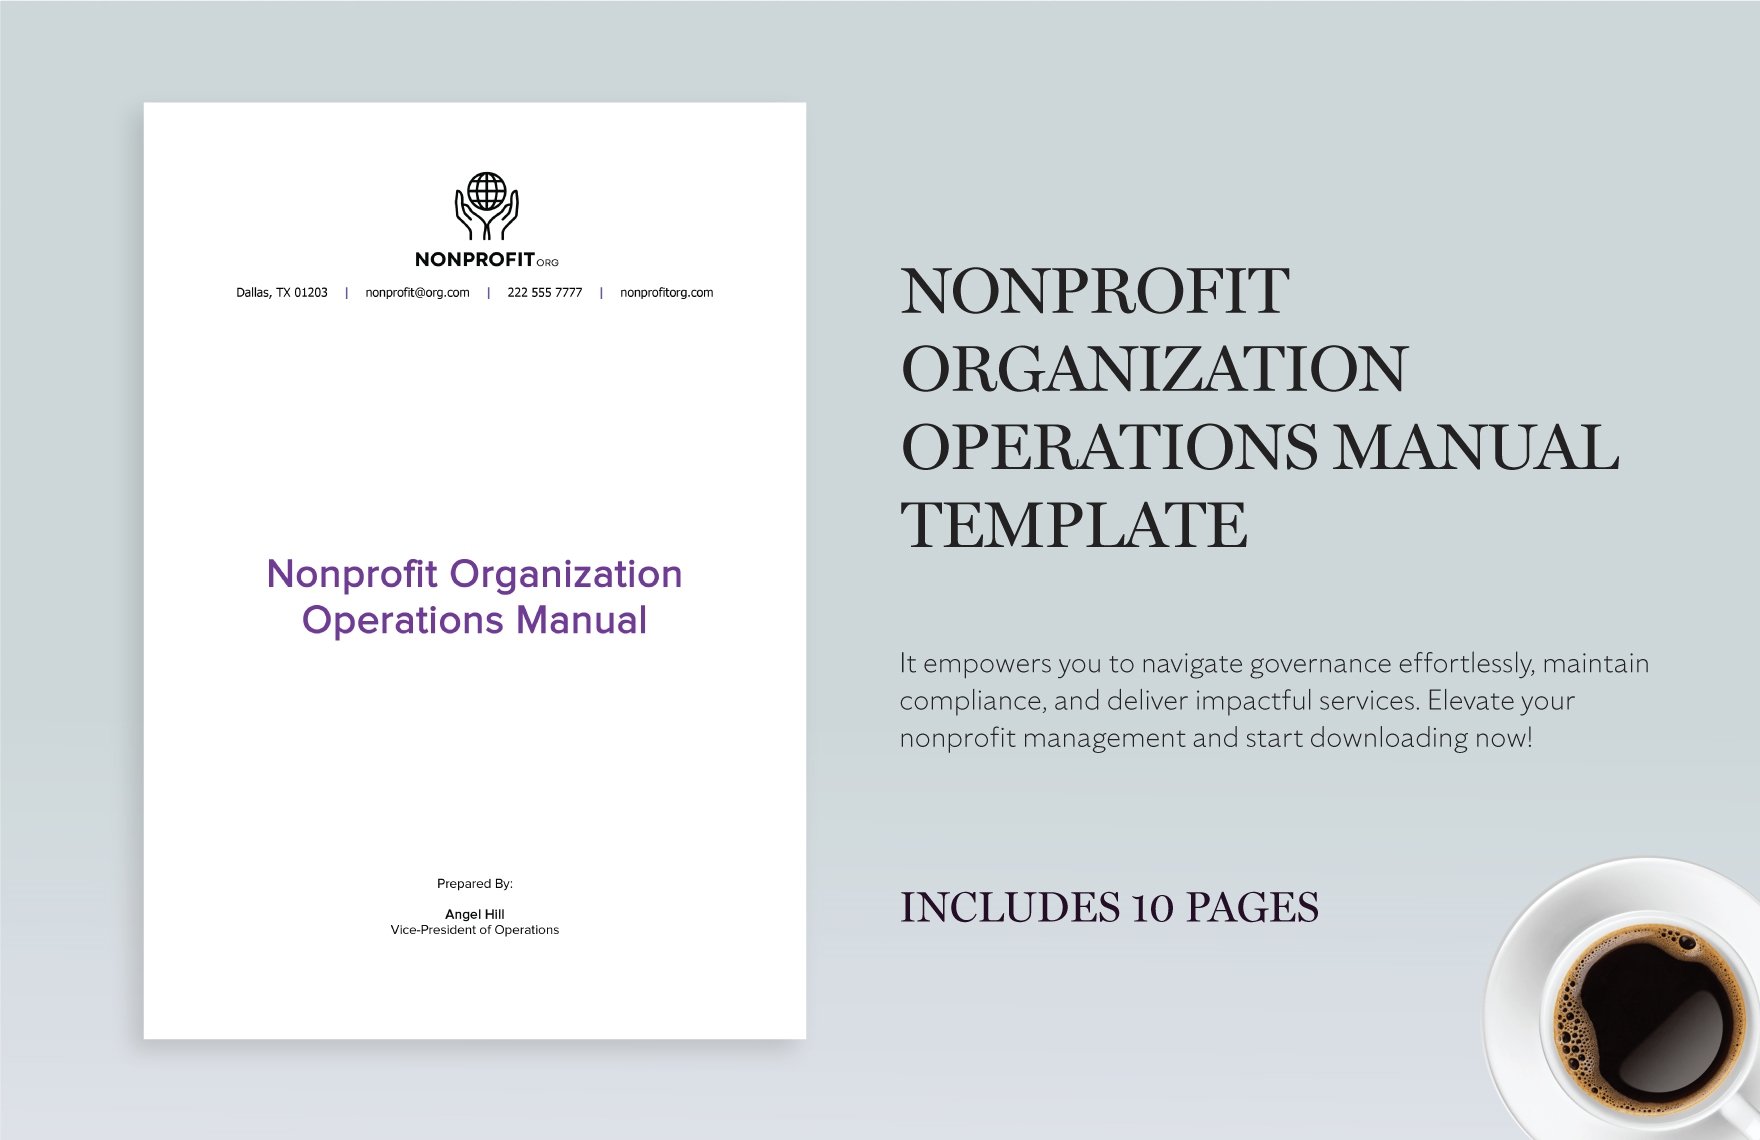 Nonprofit Organization Operations Manual Template in Word, Google Docs, PDF